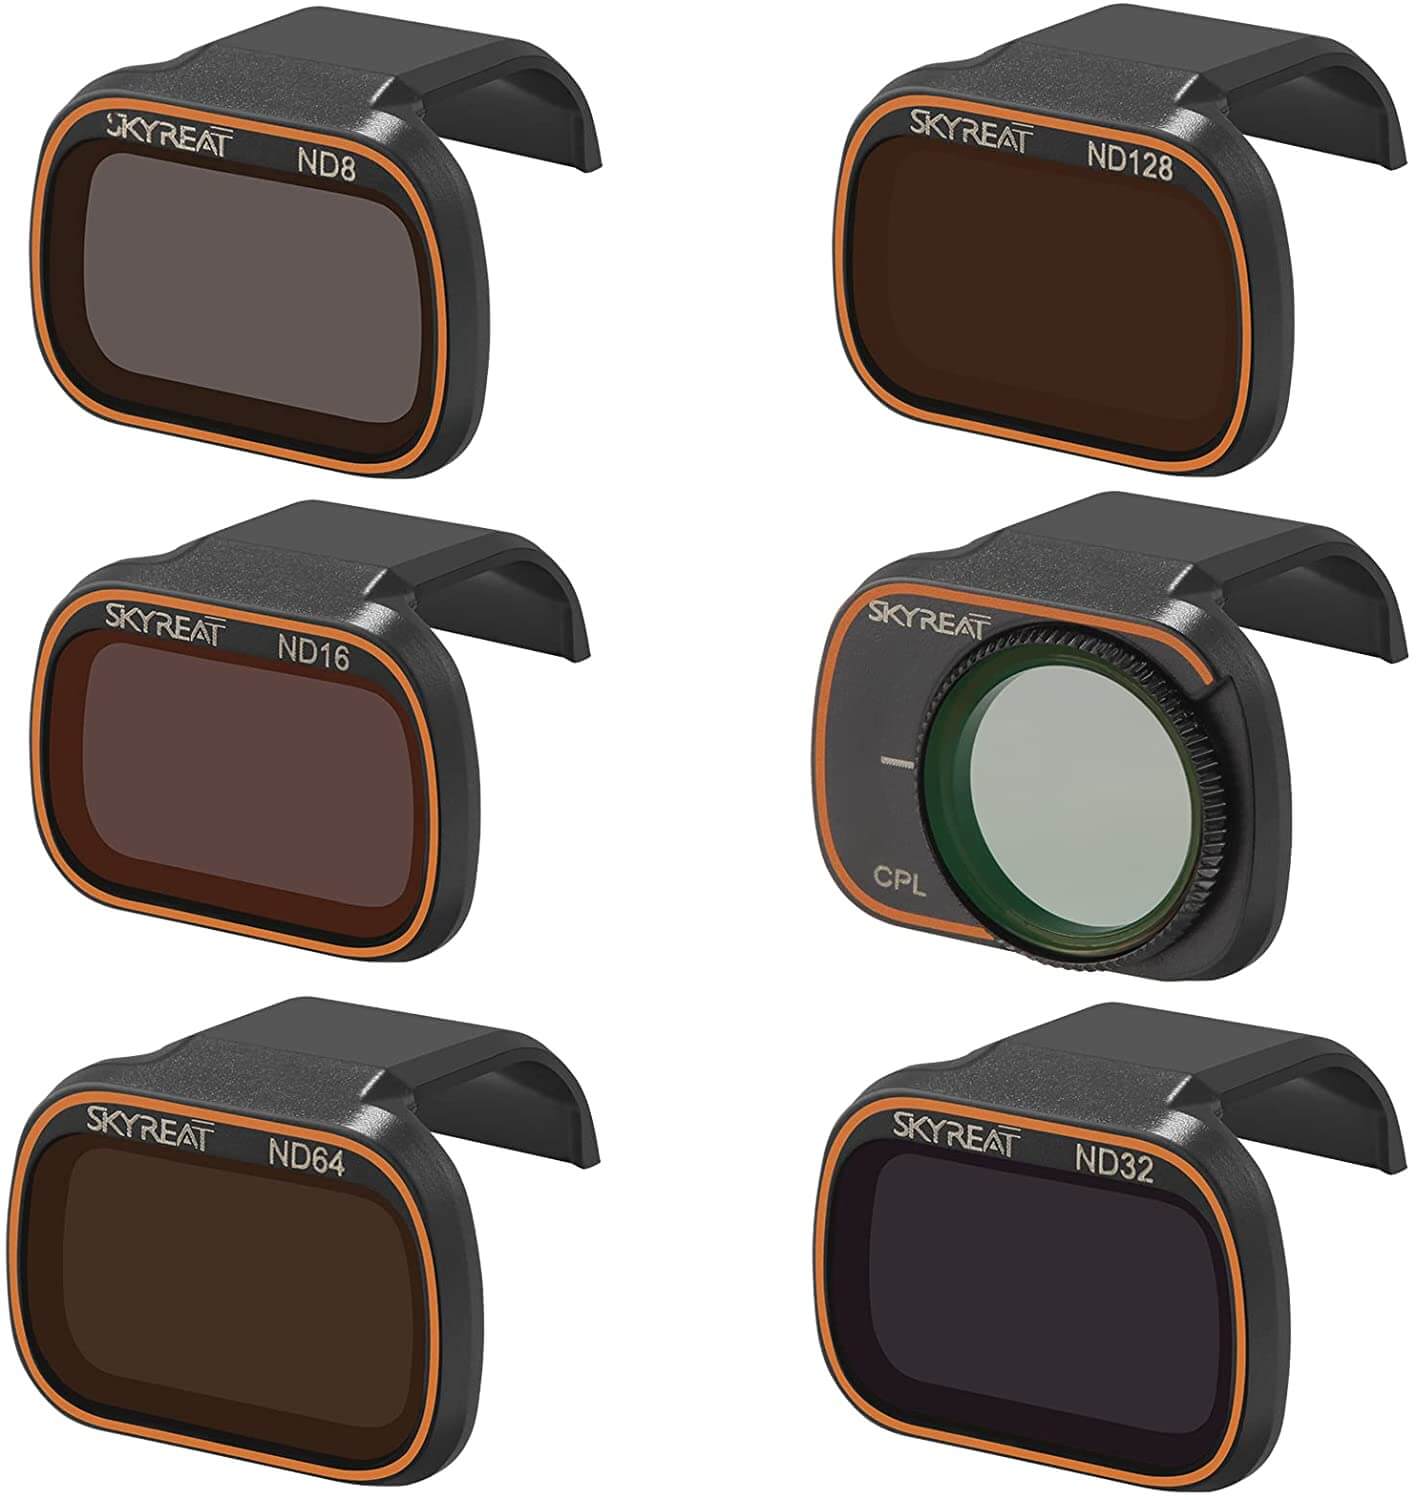 Sasuke Chidori Lens by Under 25 TKMCE - Snapchat Lenses and Filters